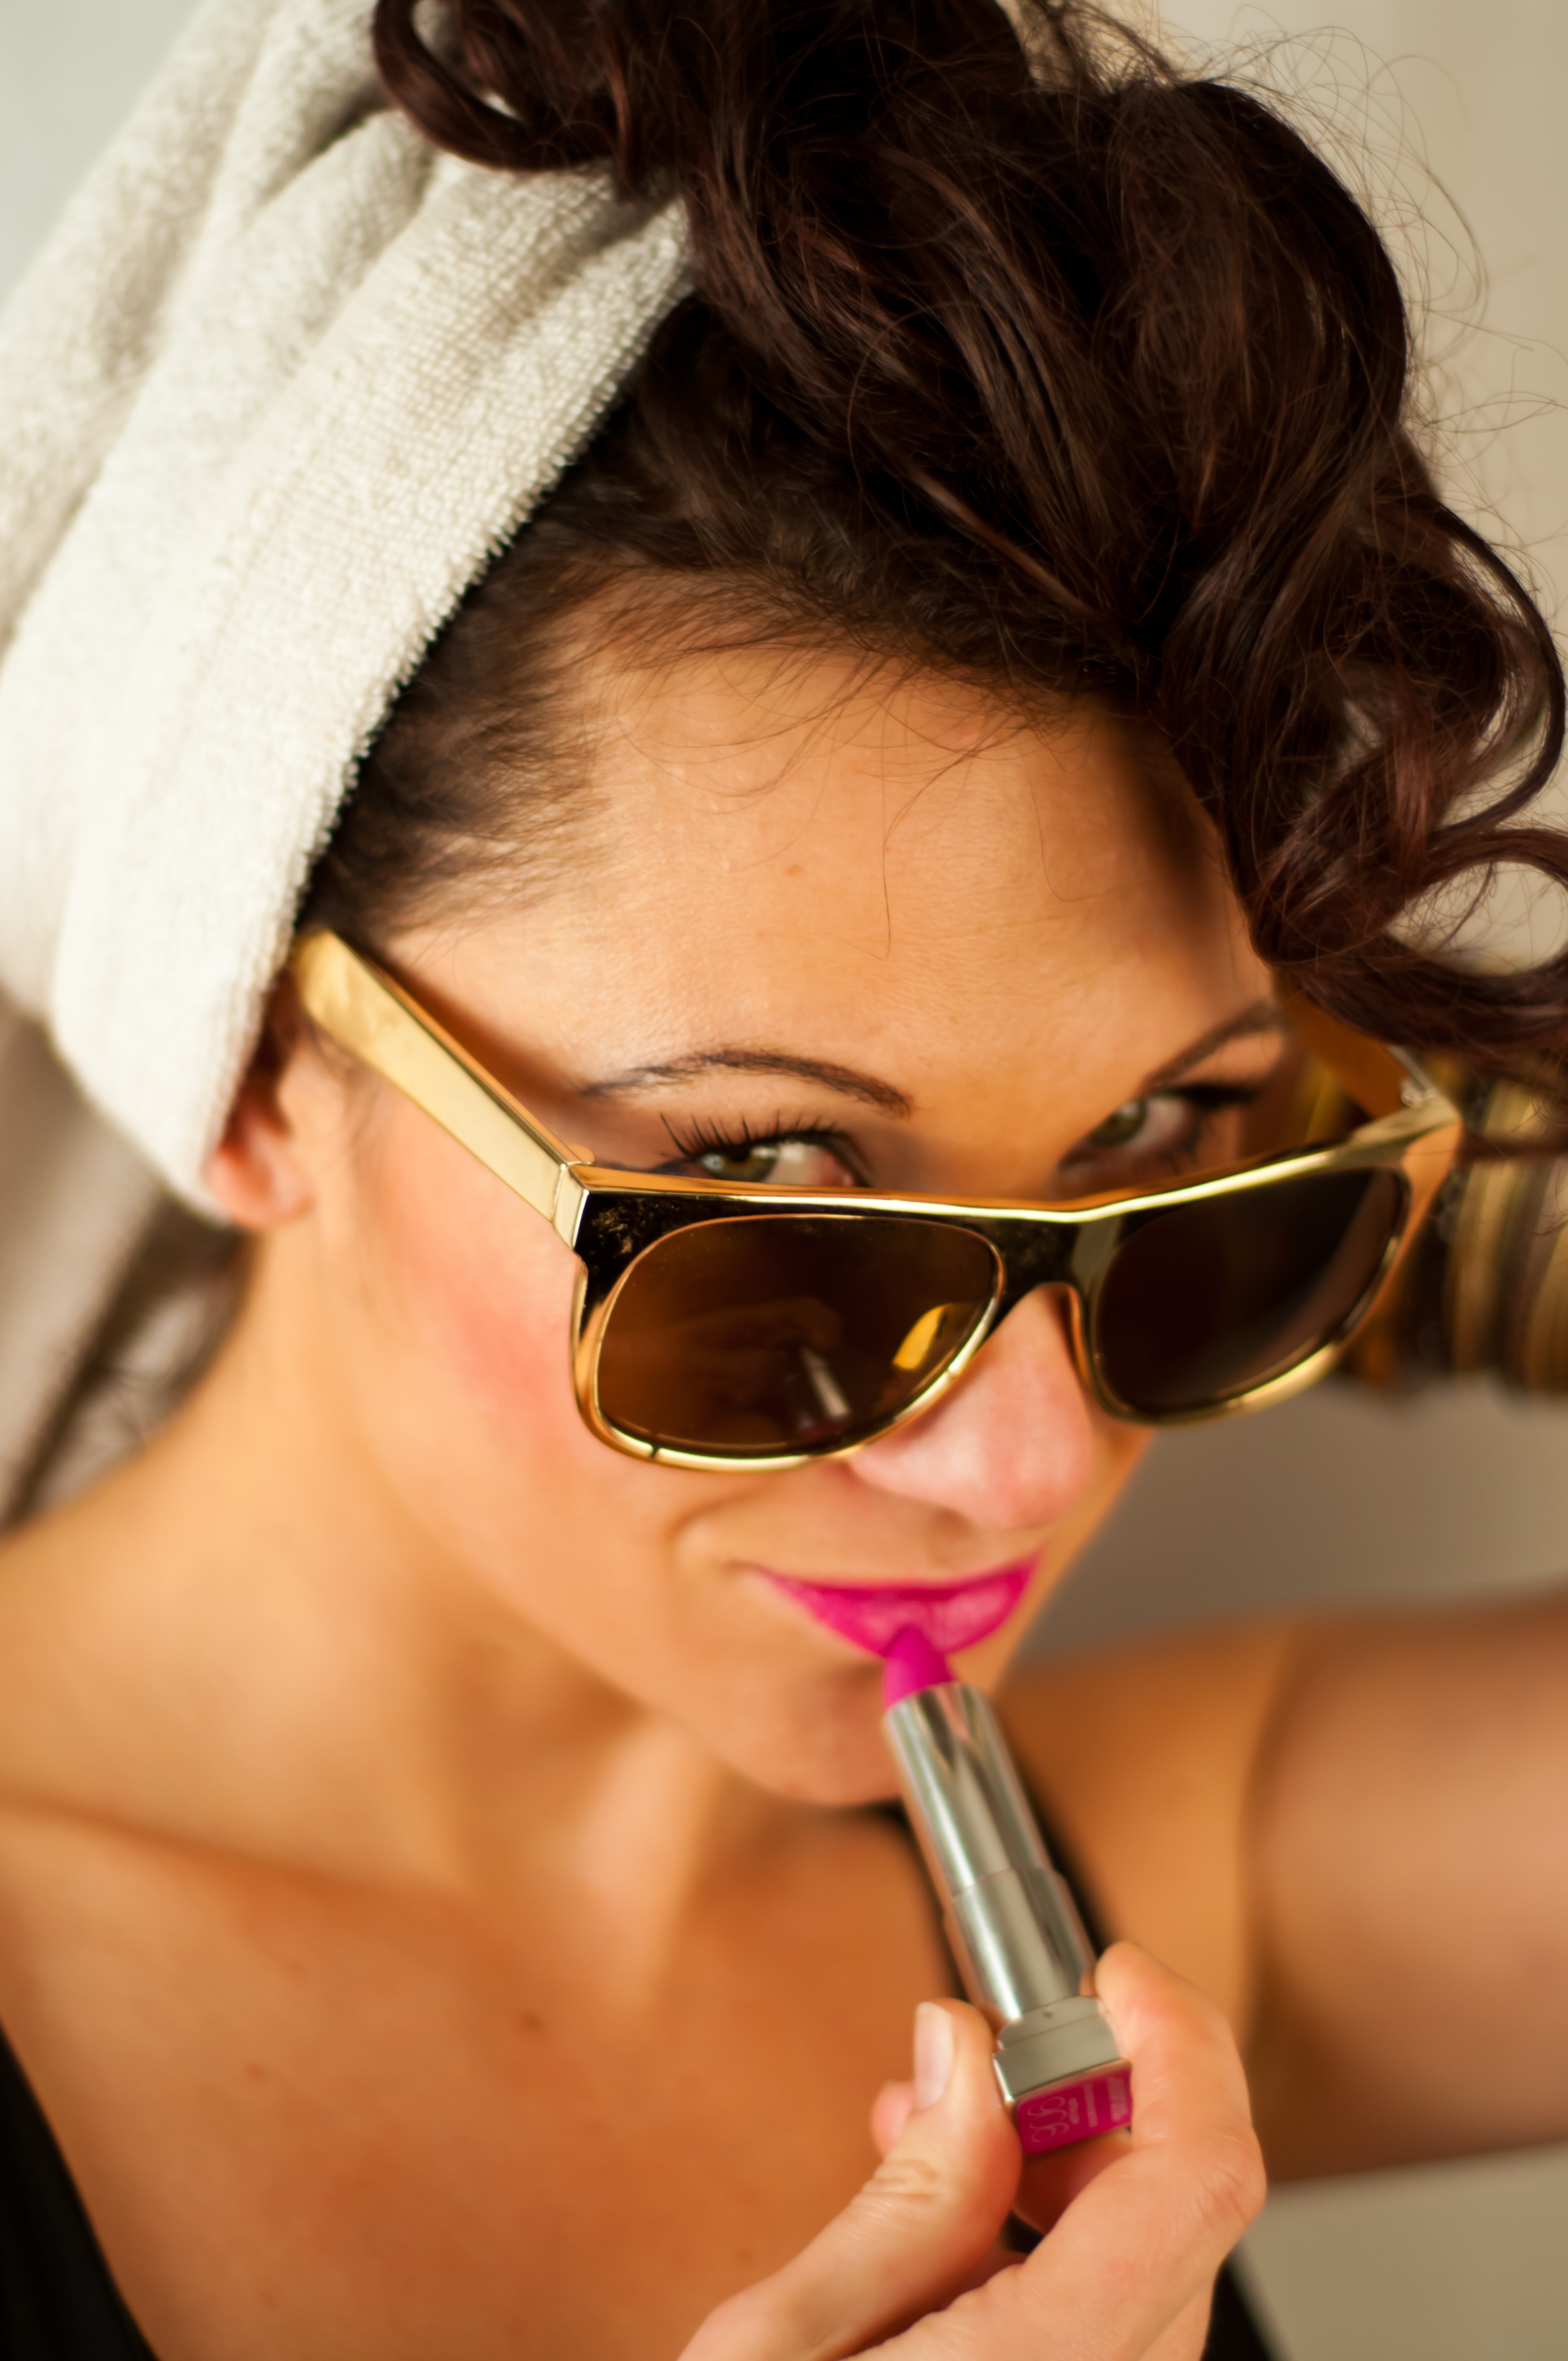 Woman Wearing Sunglasses, Pretty, Person, Photoshoot, Portrait, HQ Photo